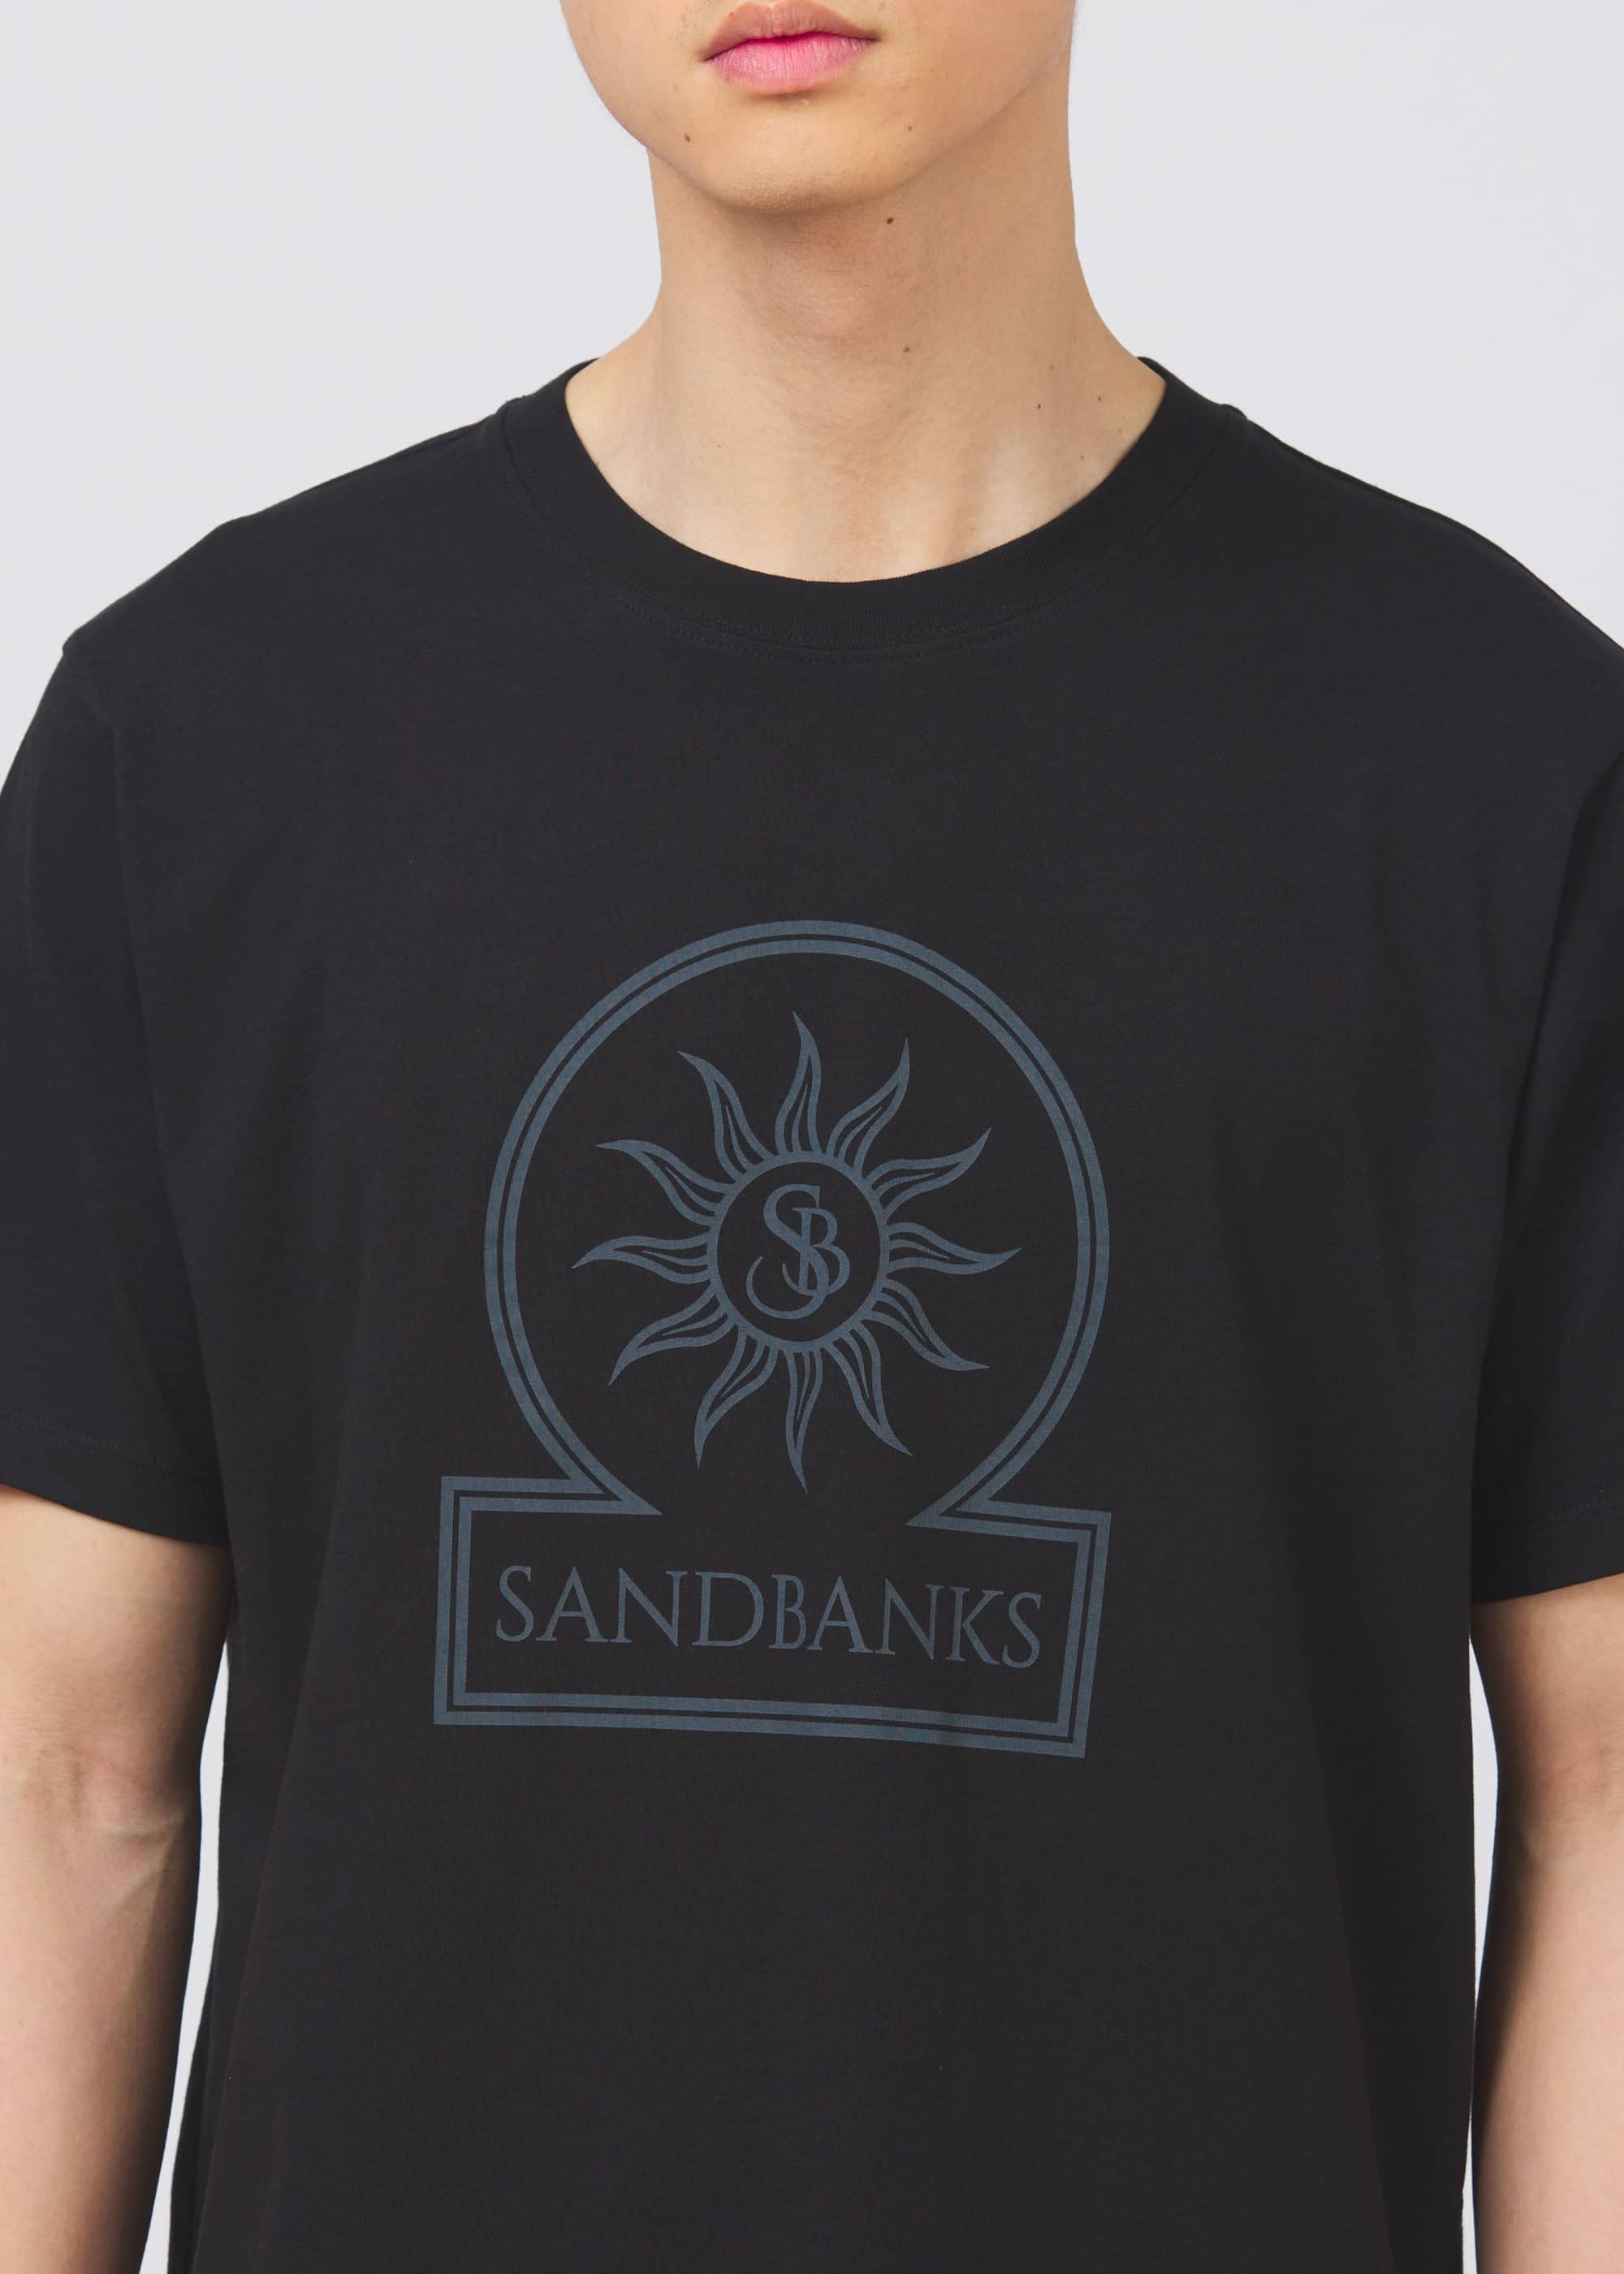 Sandbanks Logo Graphic T-Shirt - Black - Sandbanks